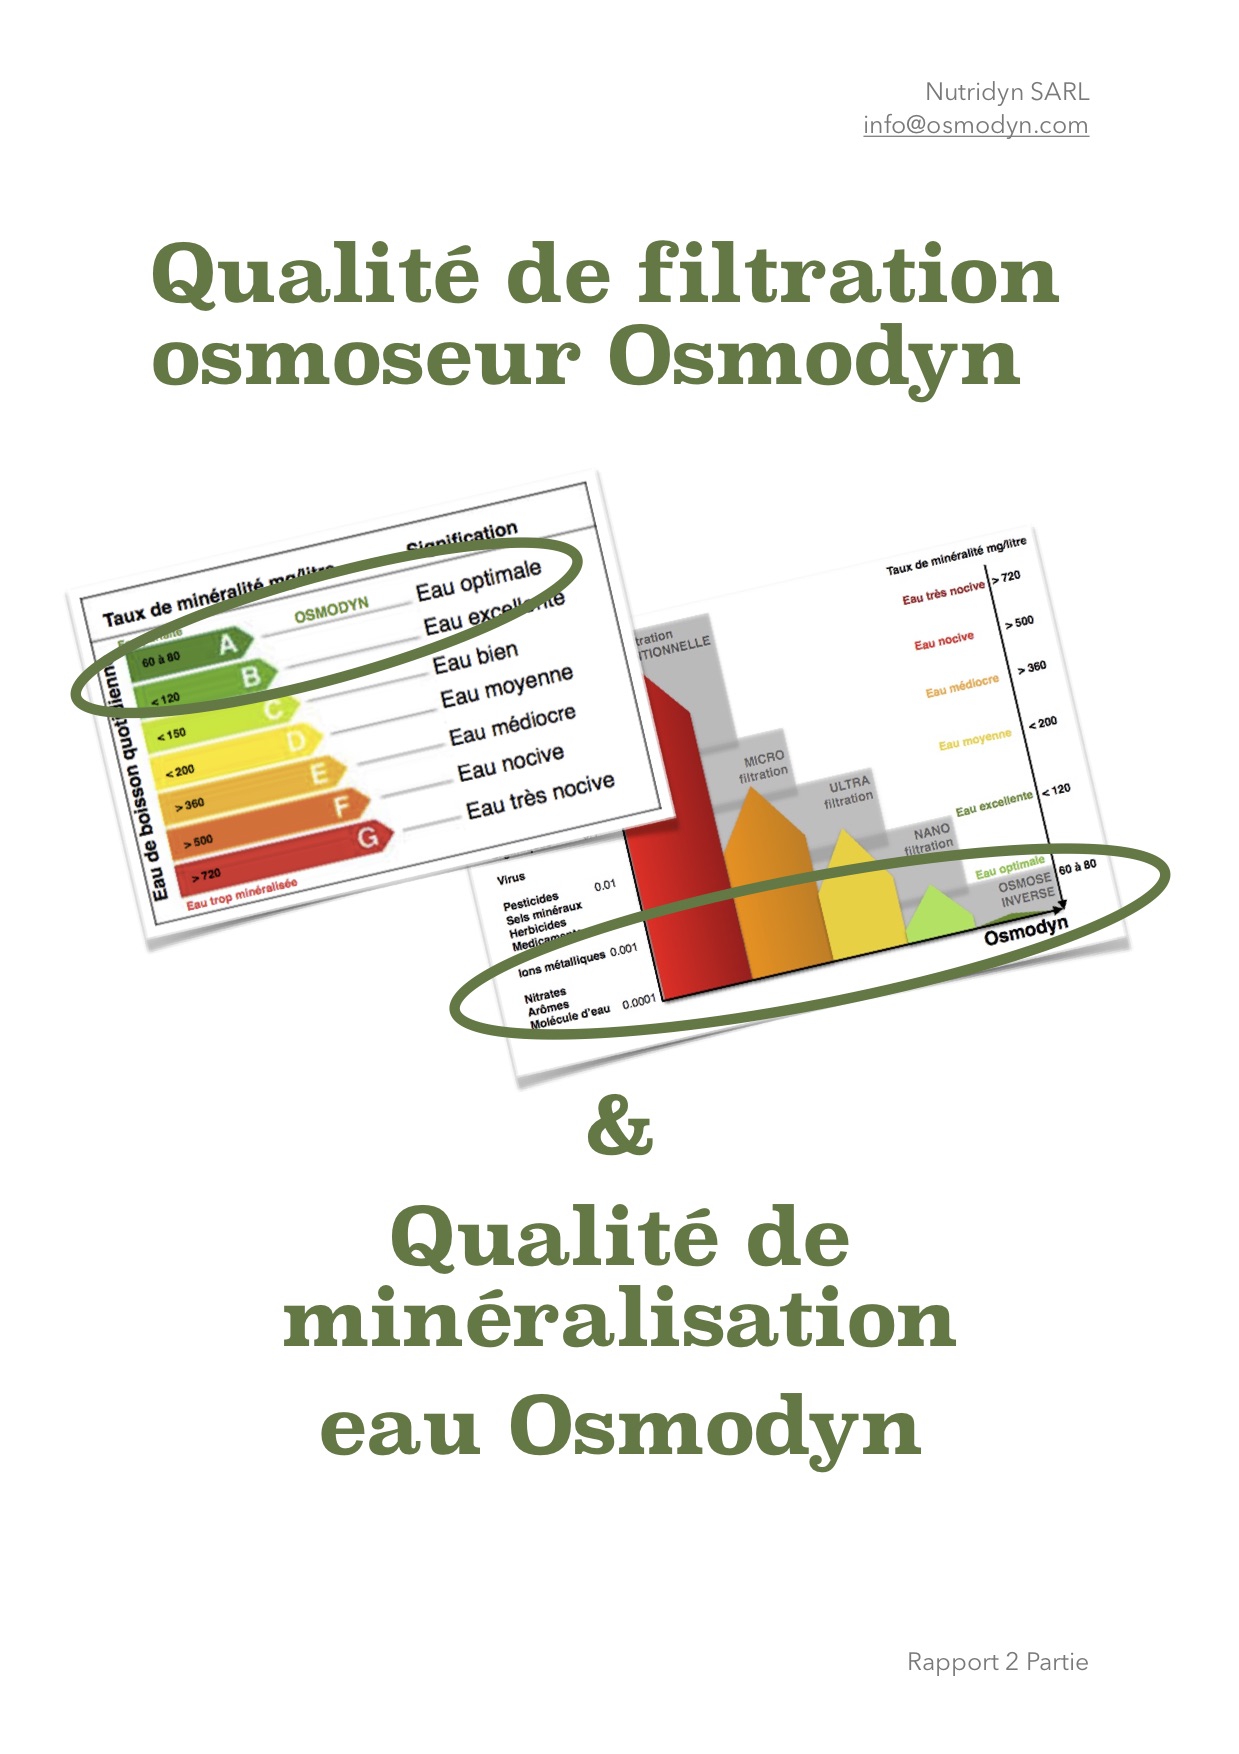 Osmodyn certification qualité